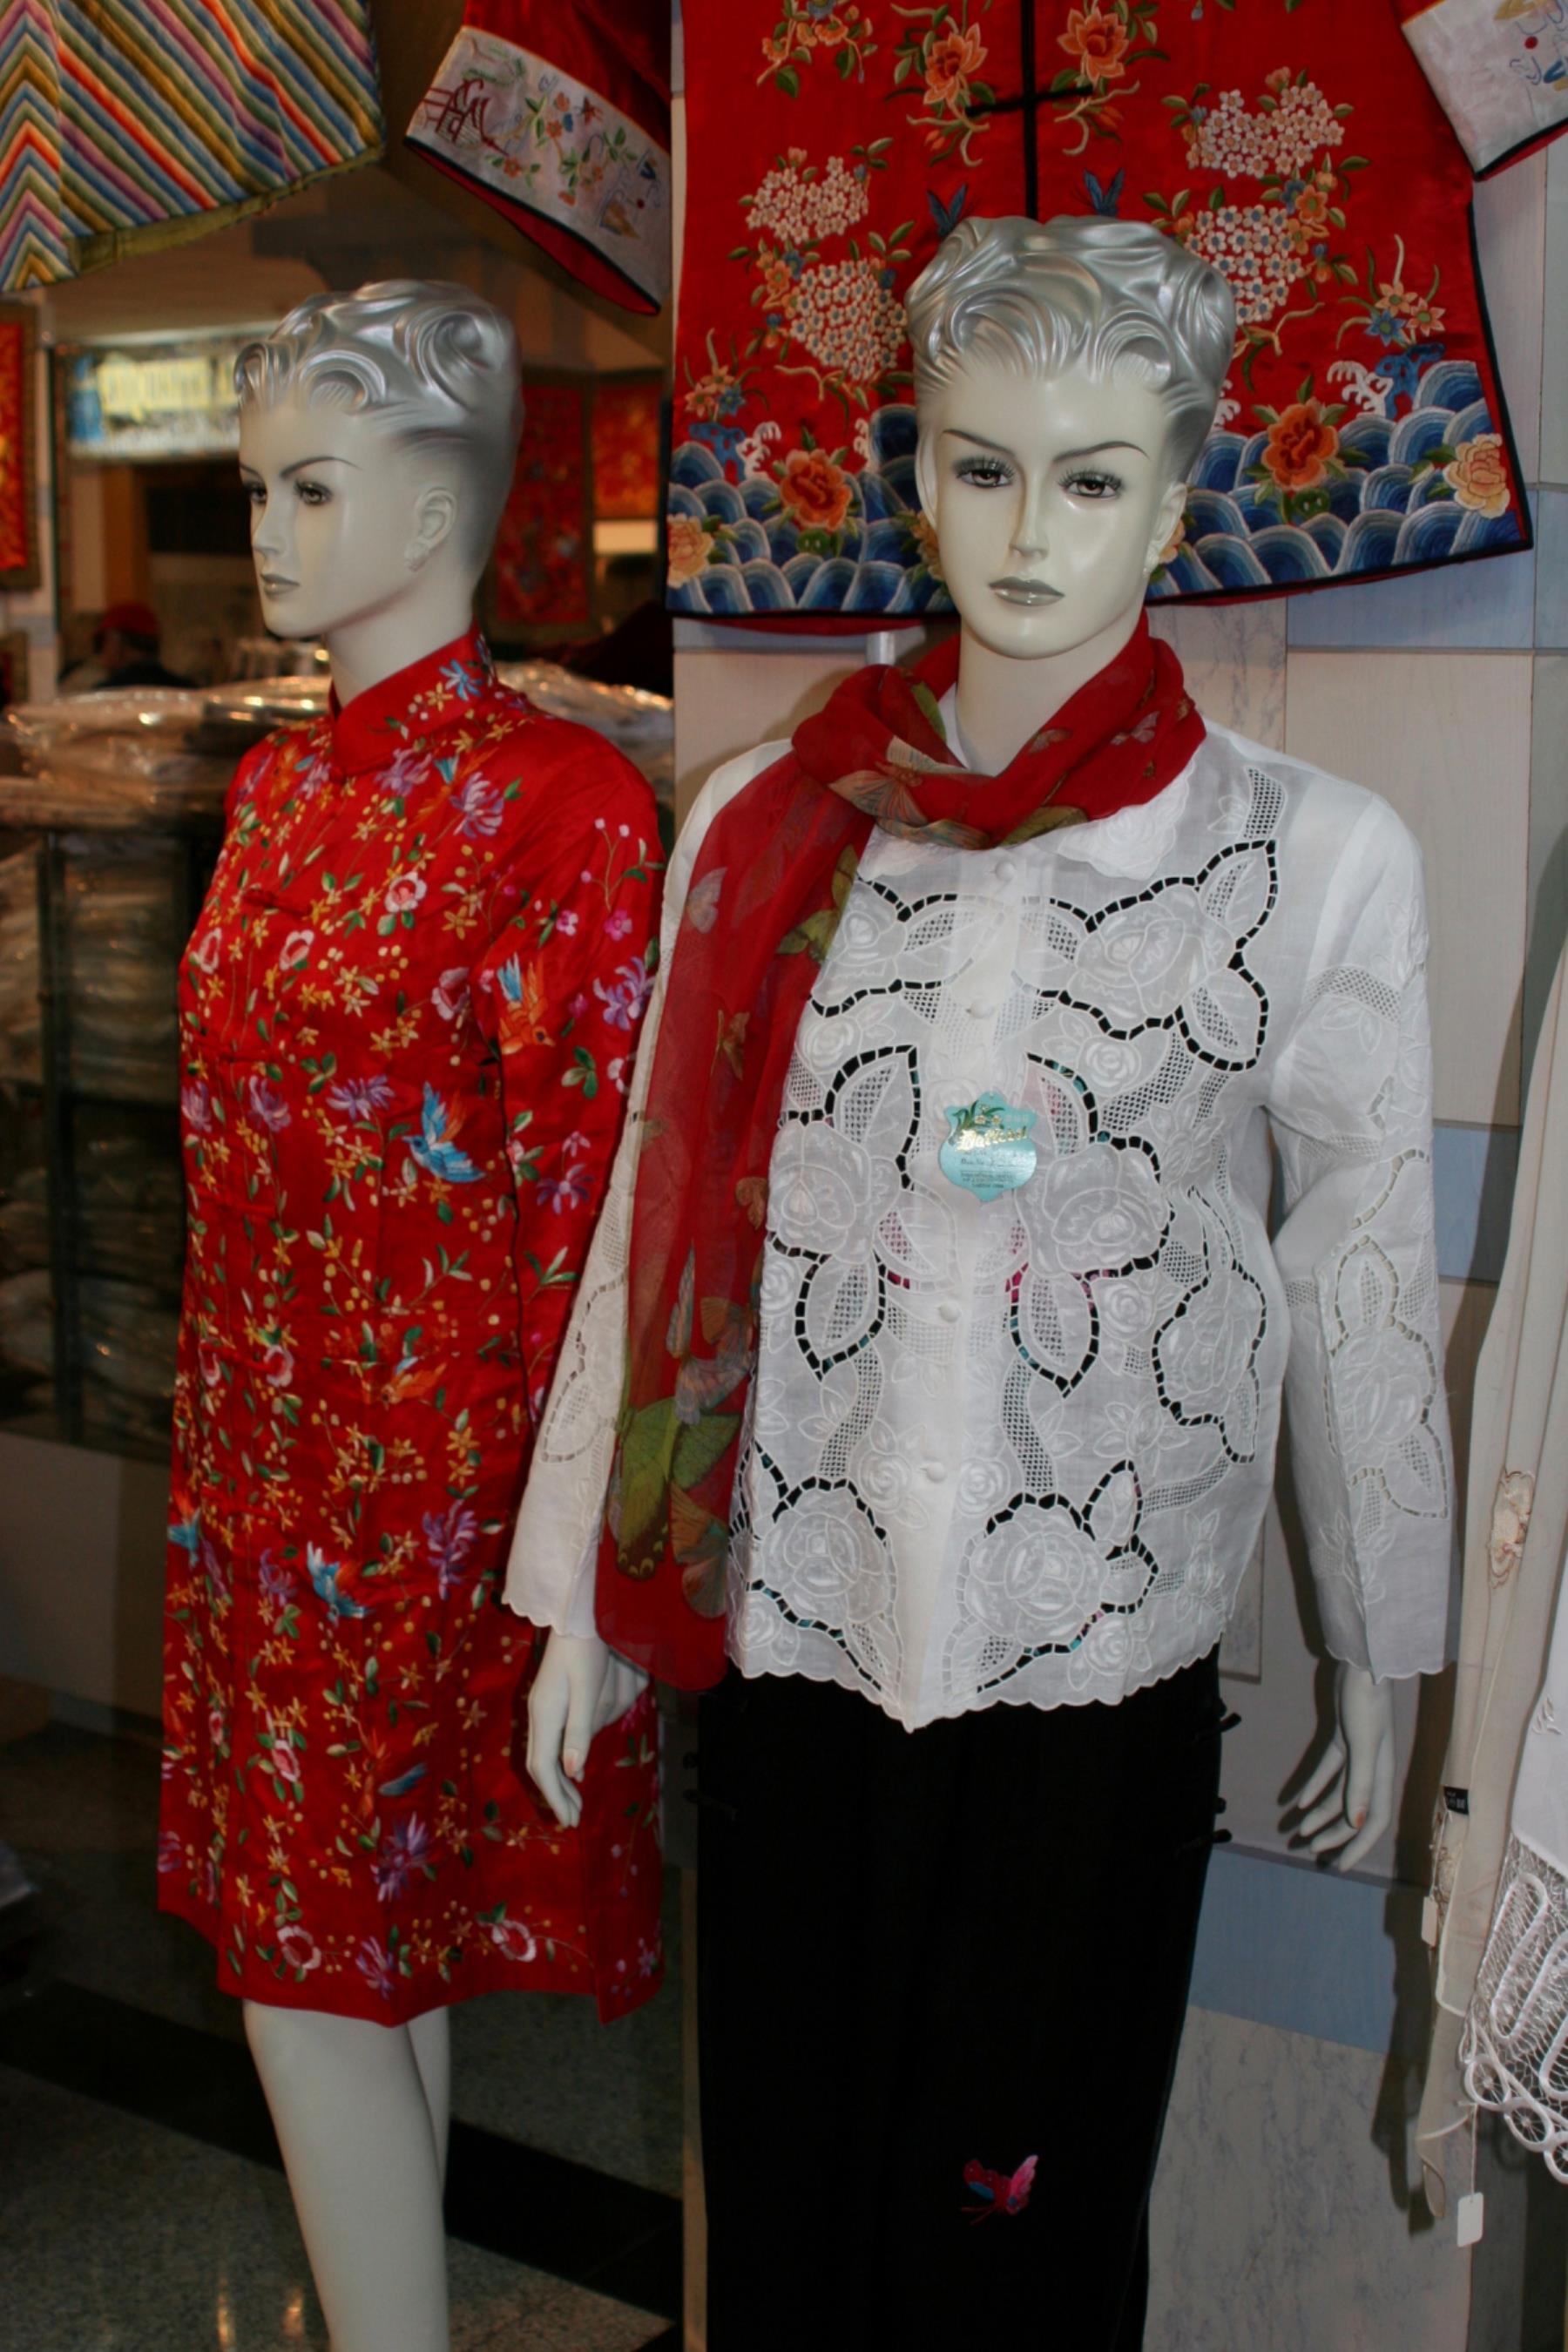 Chinese women's clothing